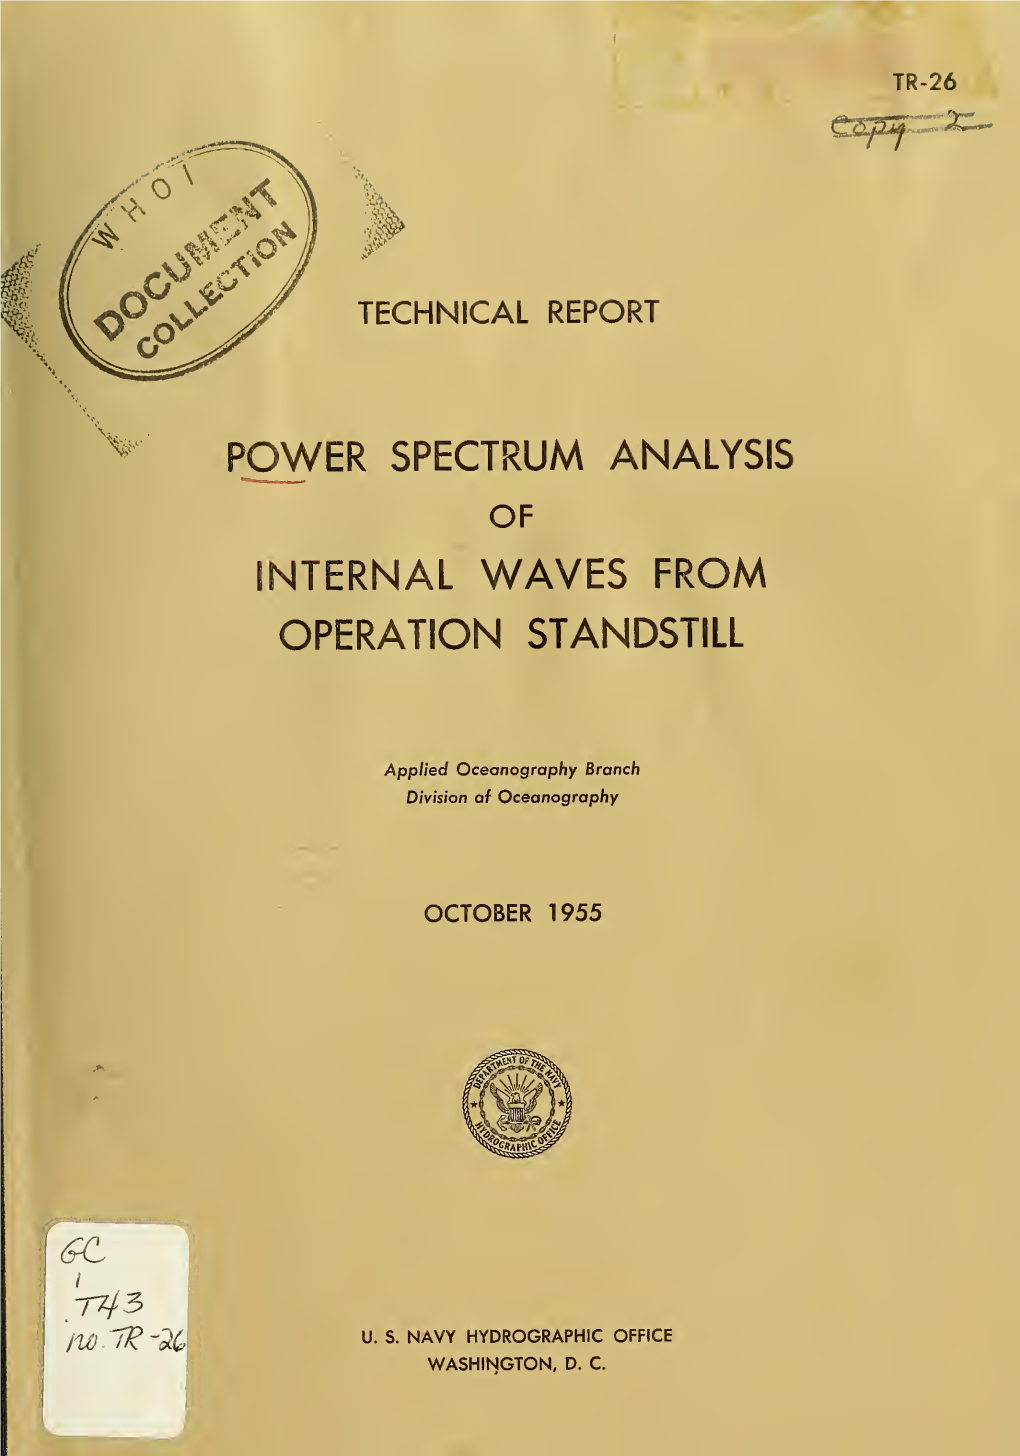 Power Spectrum Analysis of Internal Waves from Operation Standstill